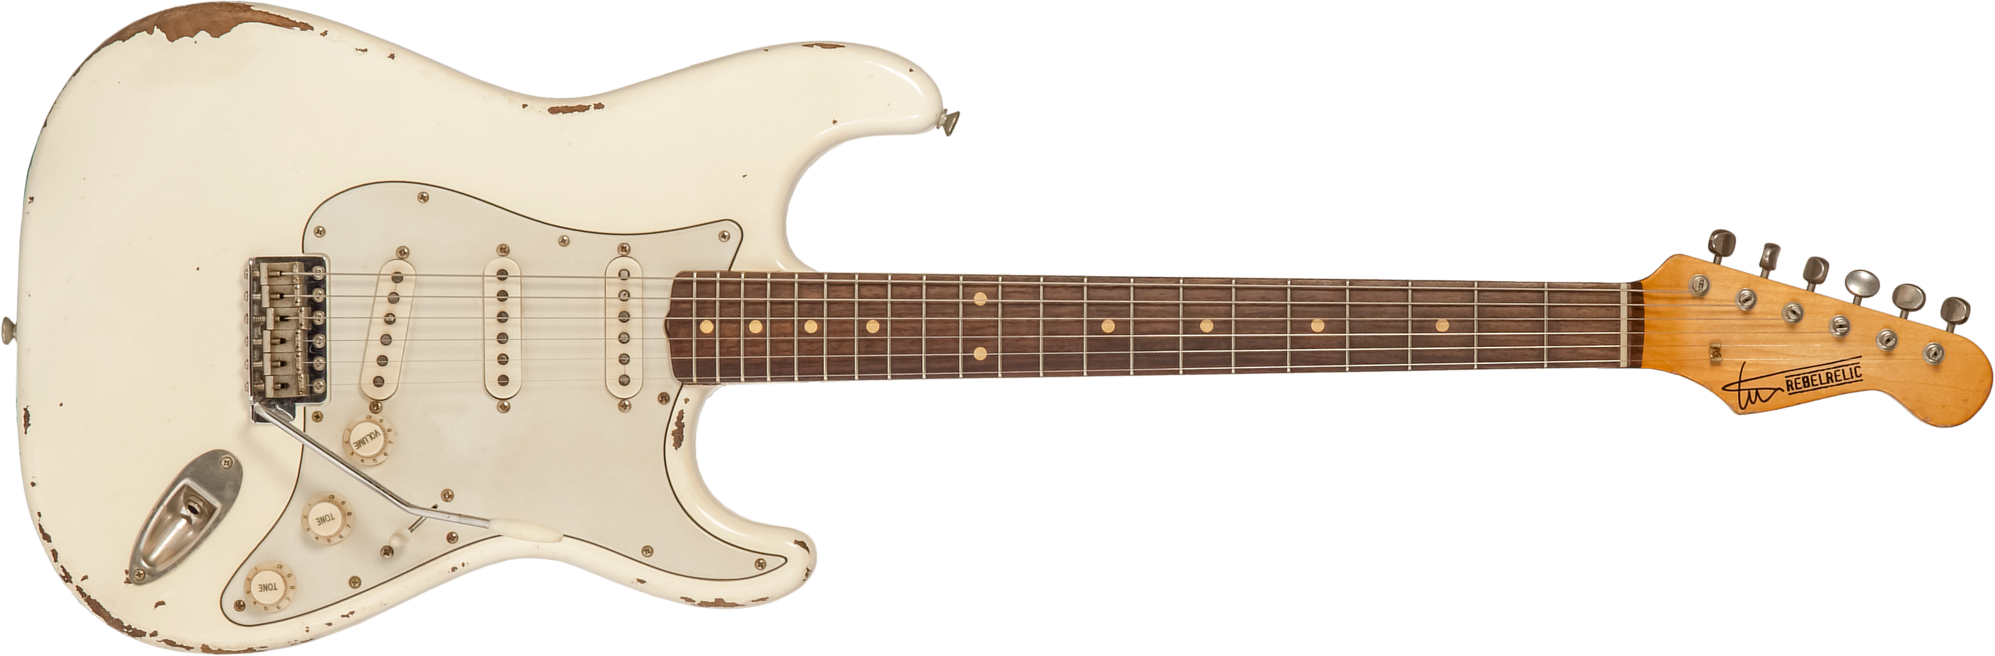 Rebelrelic S-series 1962 3s Trem Rw #231002 - Olympic White - Guitarra eléctrica con forma de str. - Main picture